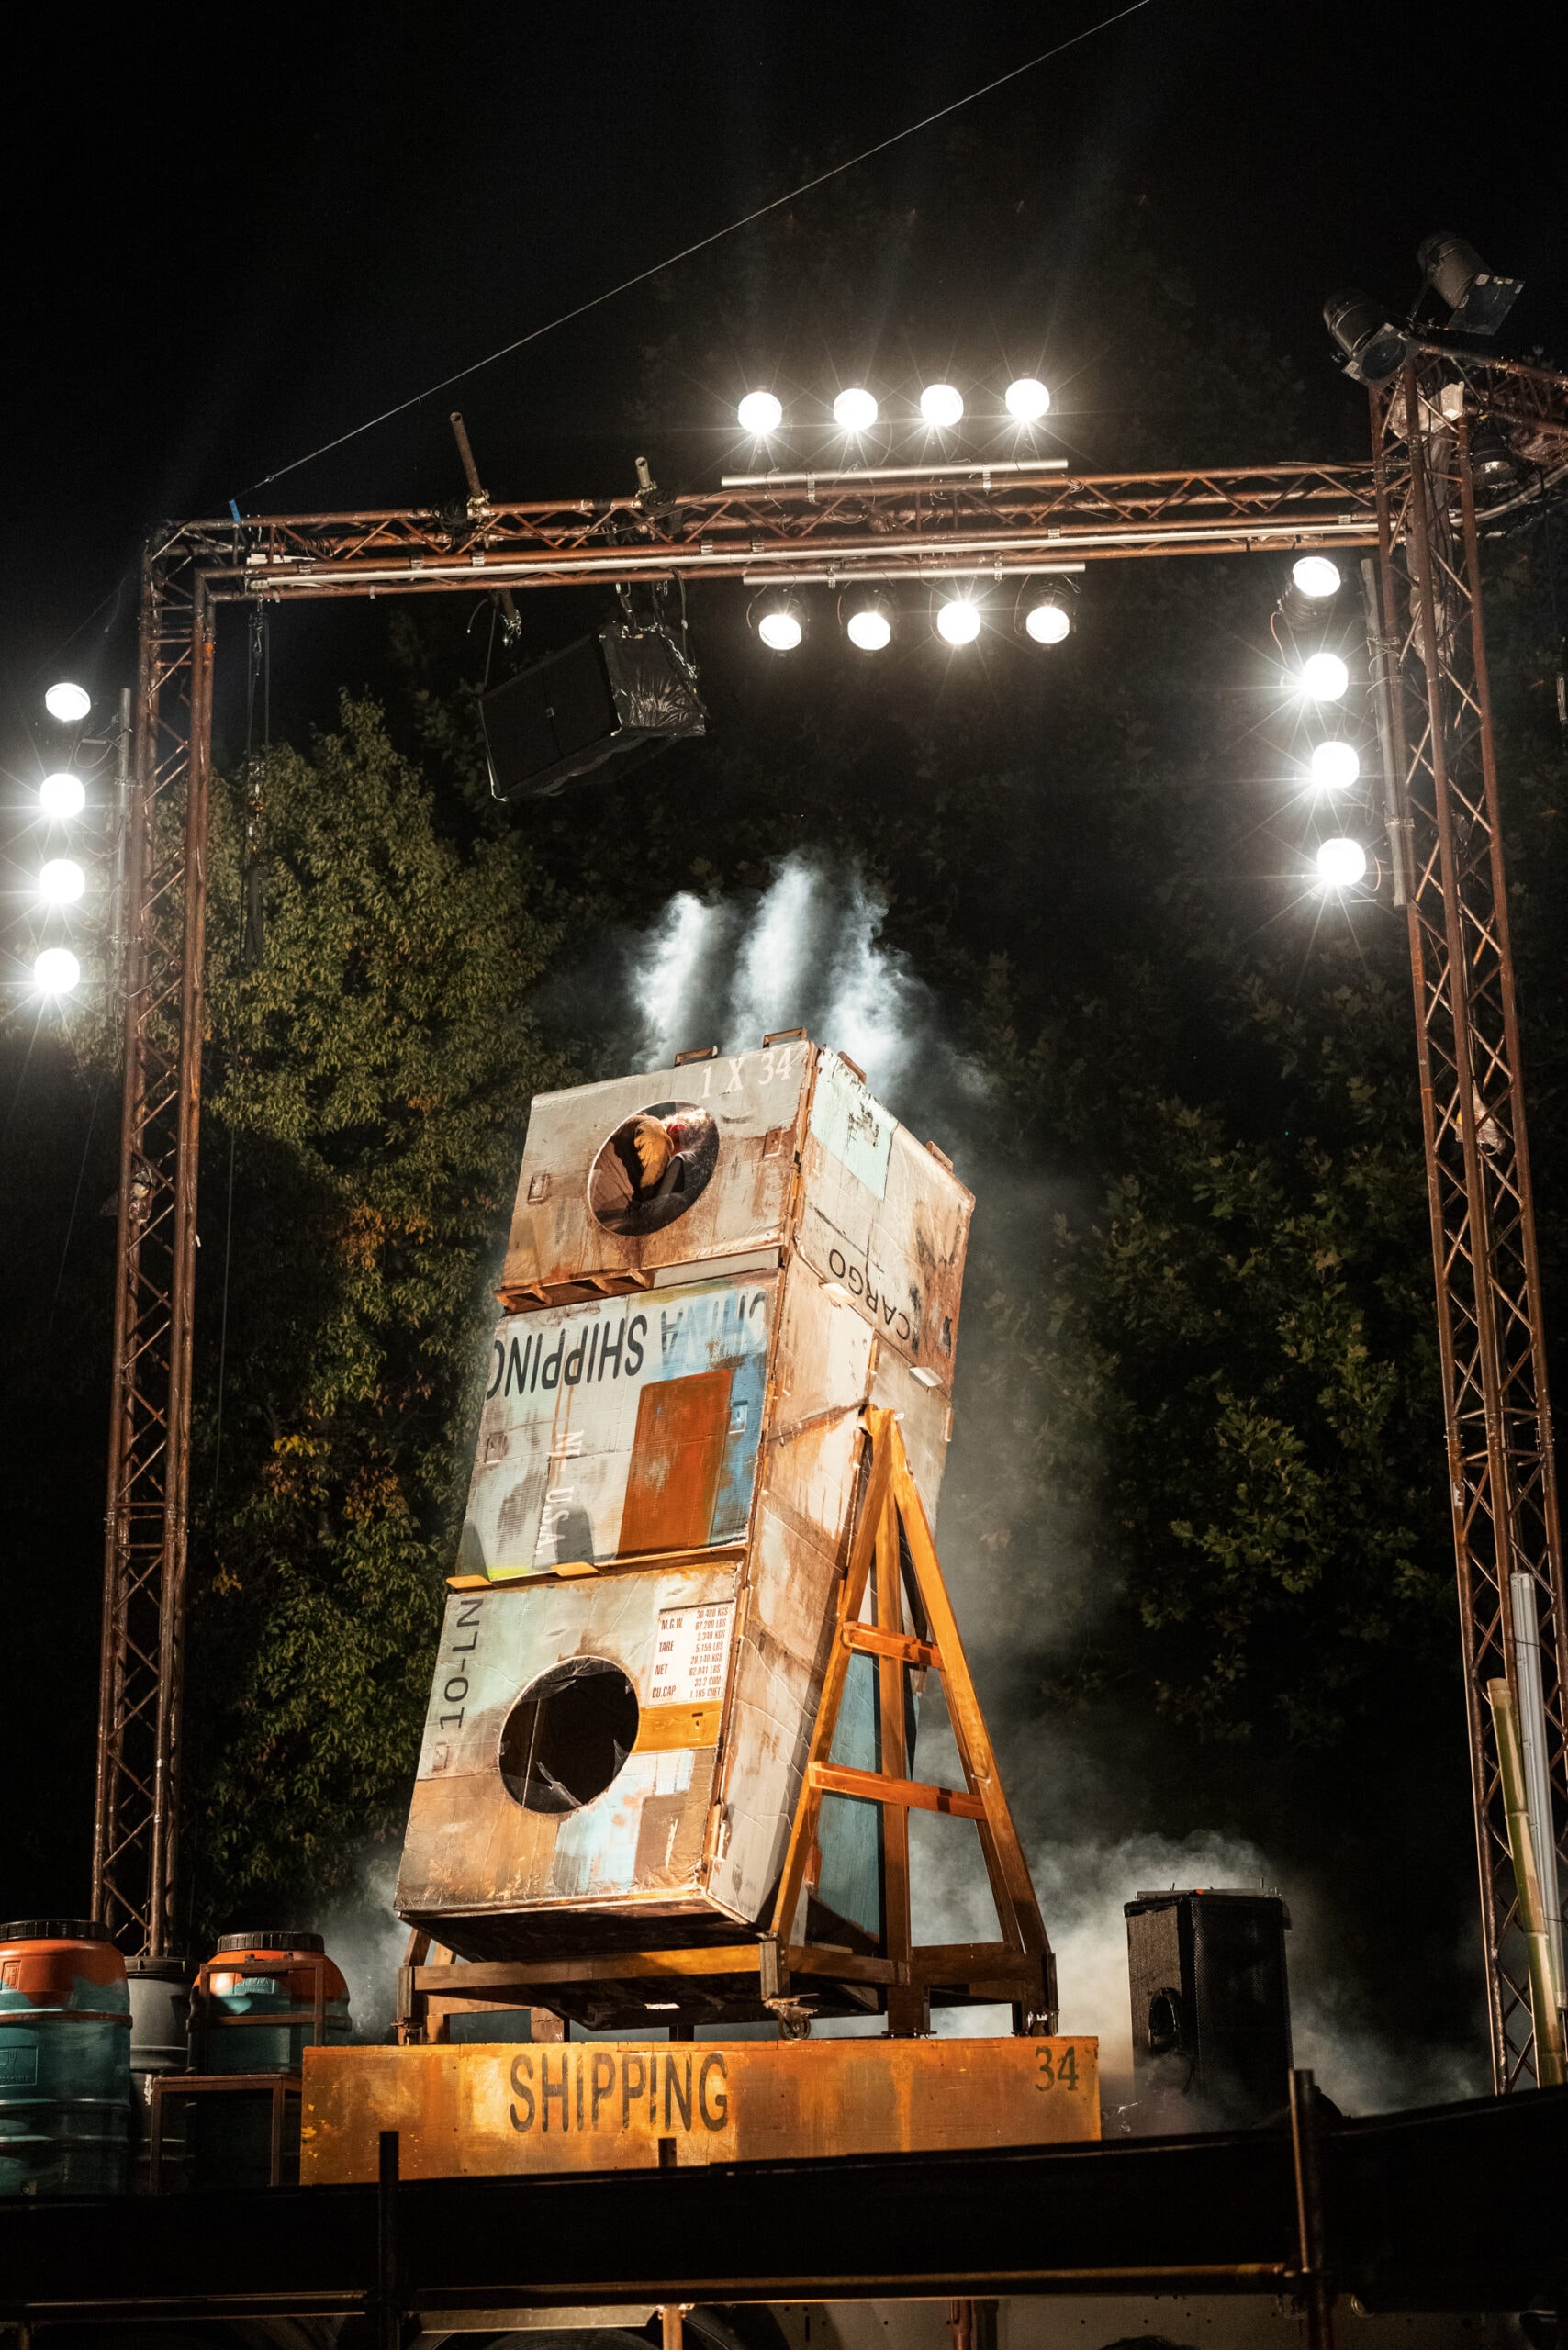 Akrobatsko-cirkuška predstava Climate of Change v Novi Gorici. Foto: Domen Grögl